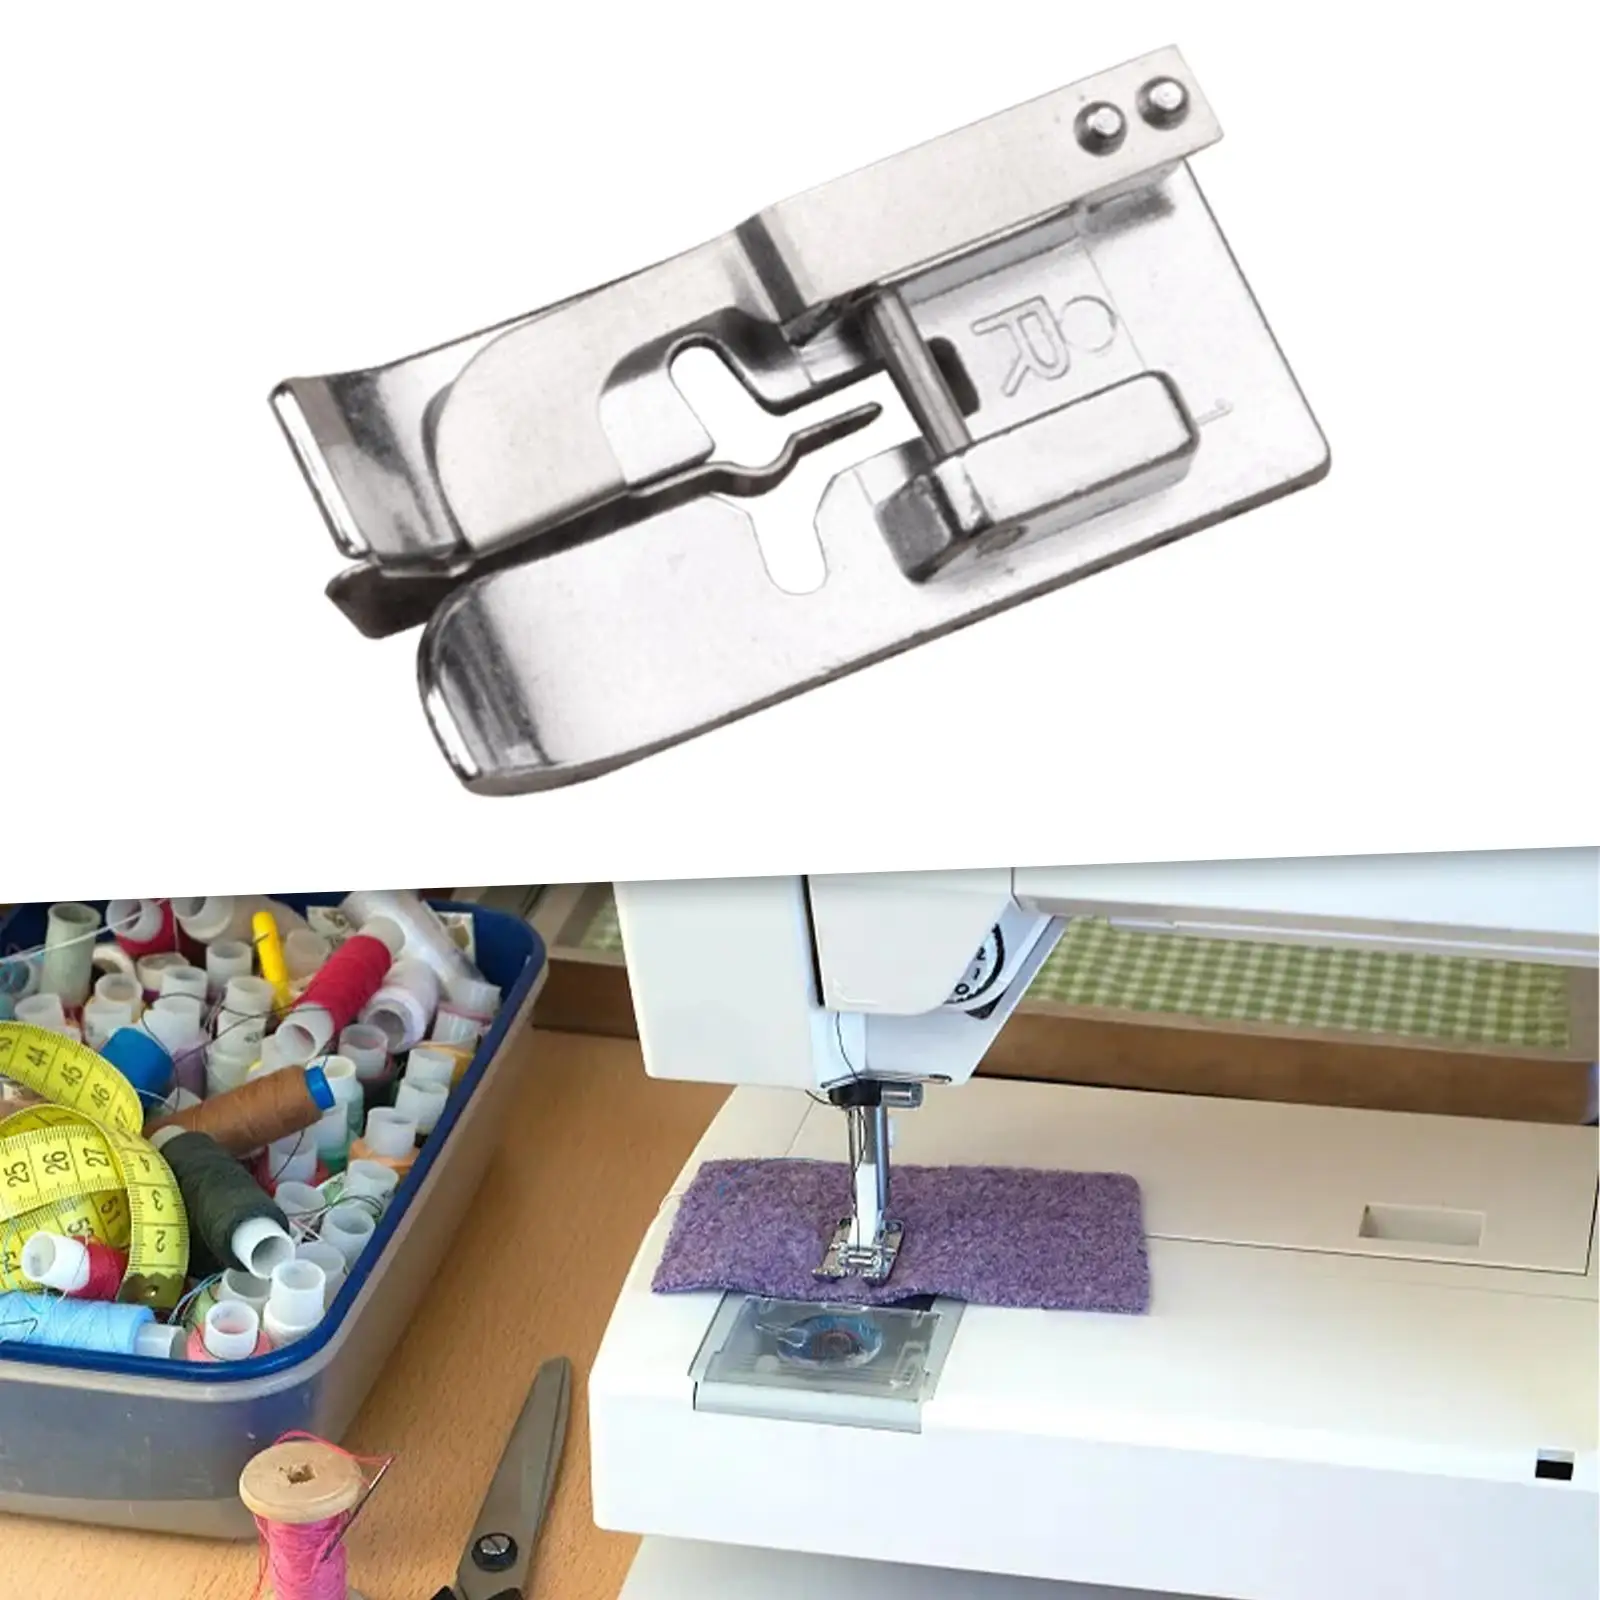 Presser Foot for Sewing Machine Stitch Hem Presser Foot for Clothes Stitching Sewing Apparel DIY Arts Crafts Pillow Cover